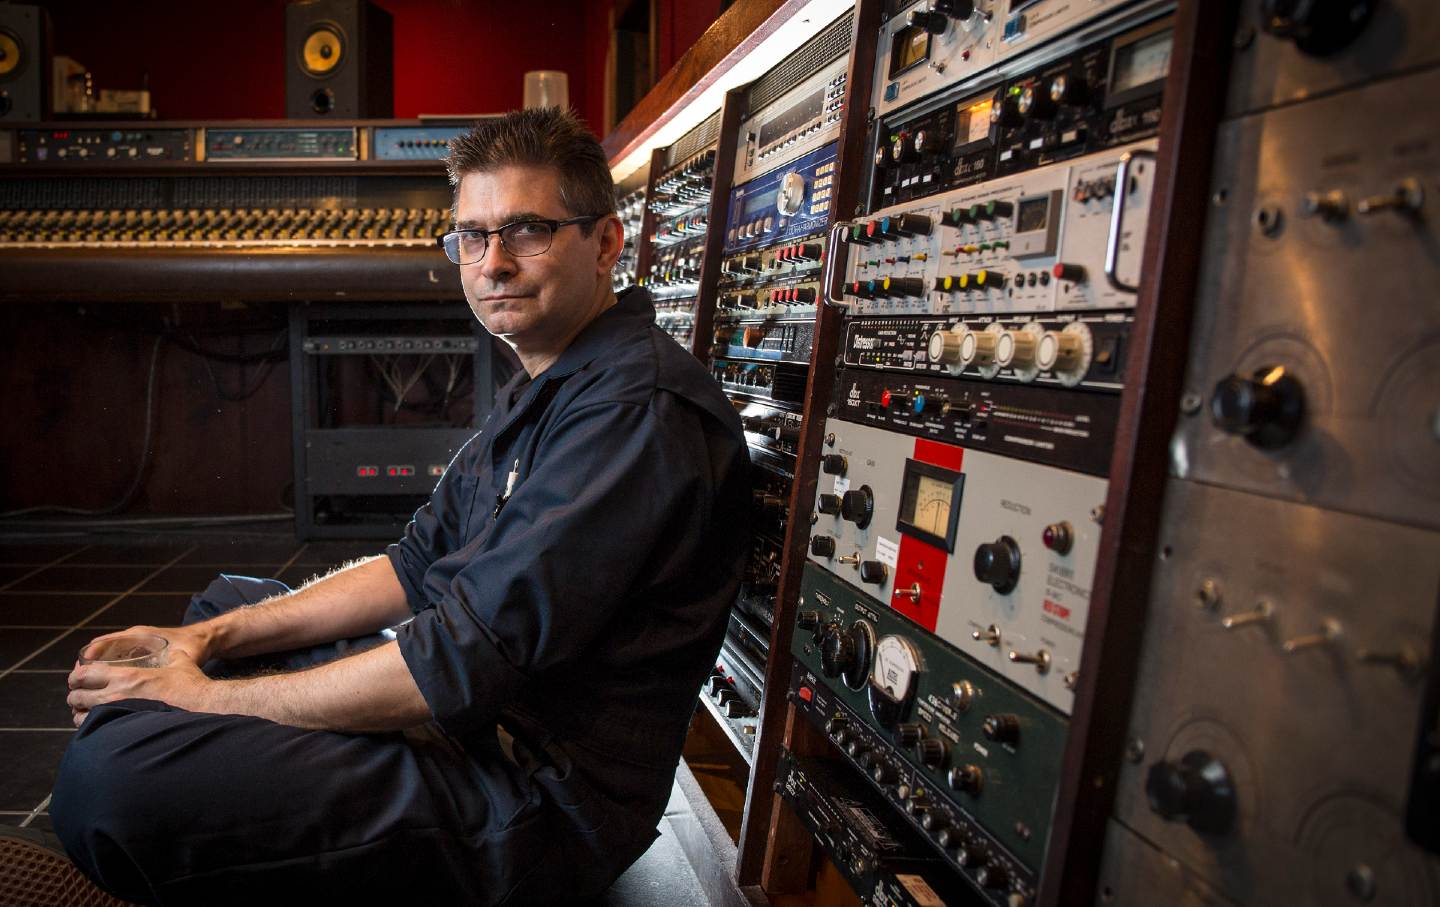 Steve Albini poses for a portrait in his recording studio.